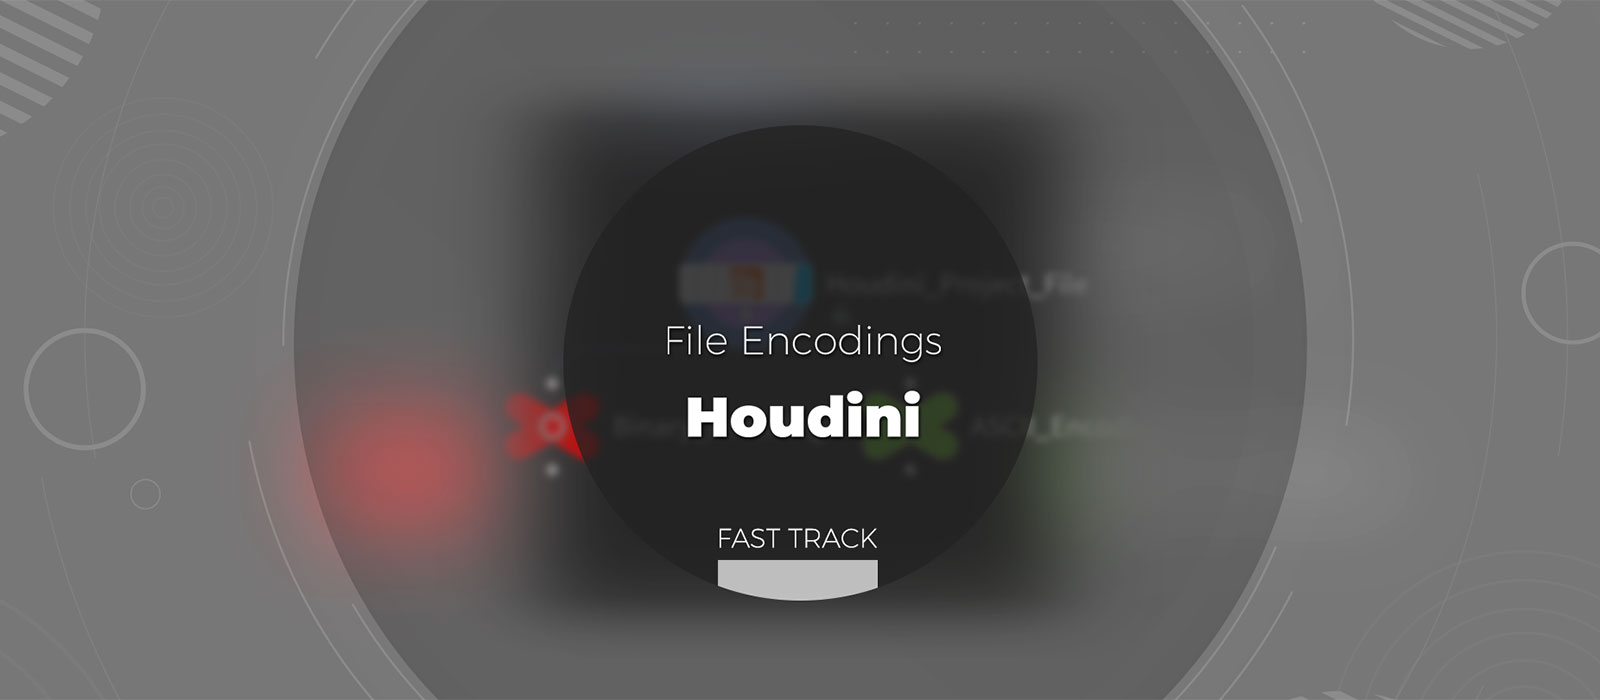 Houdini - File Encoding